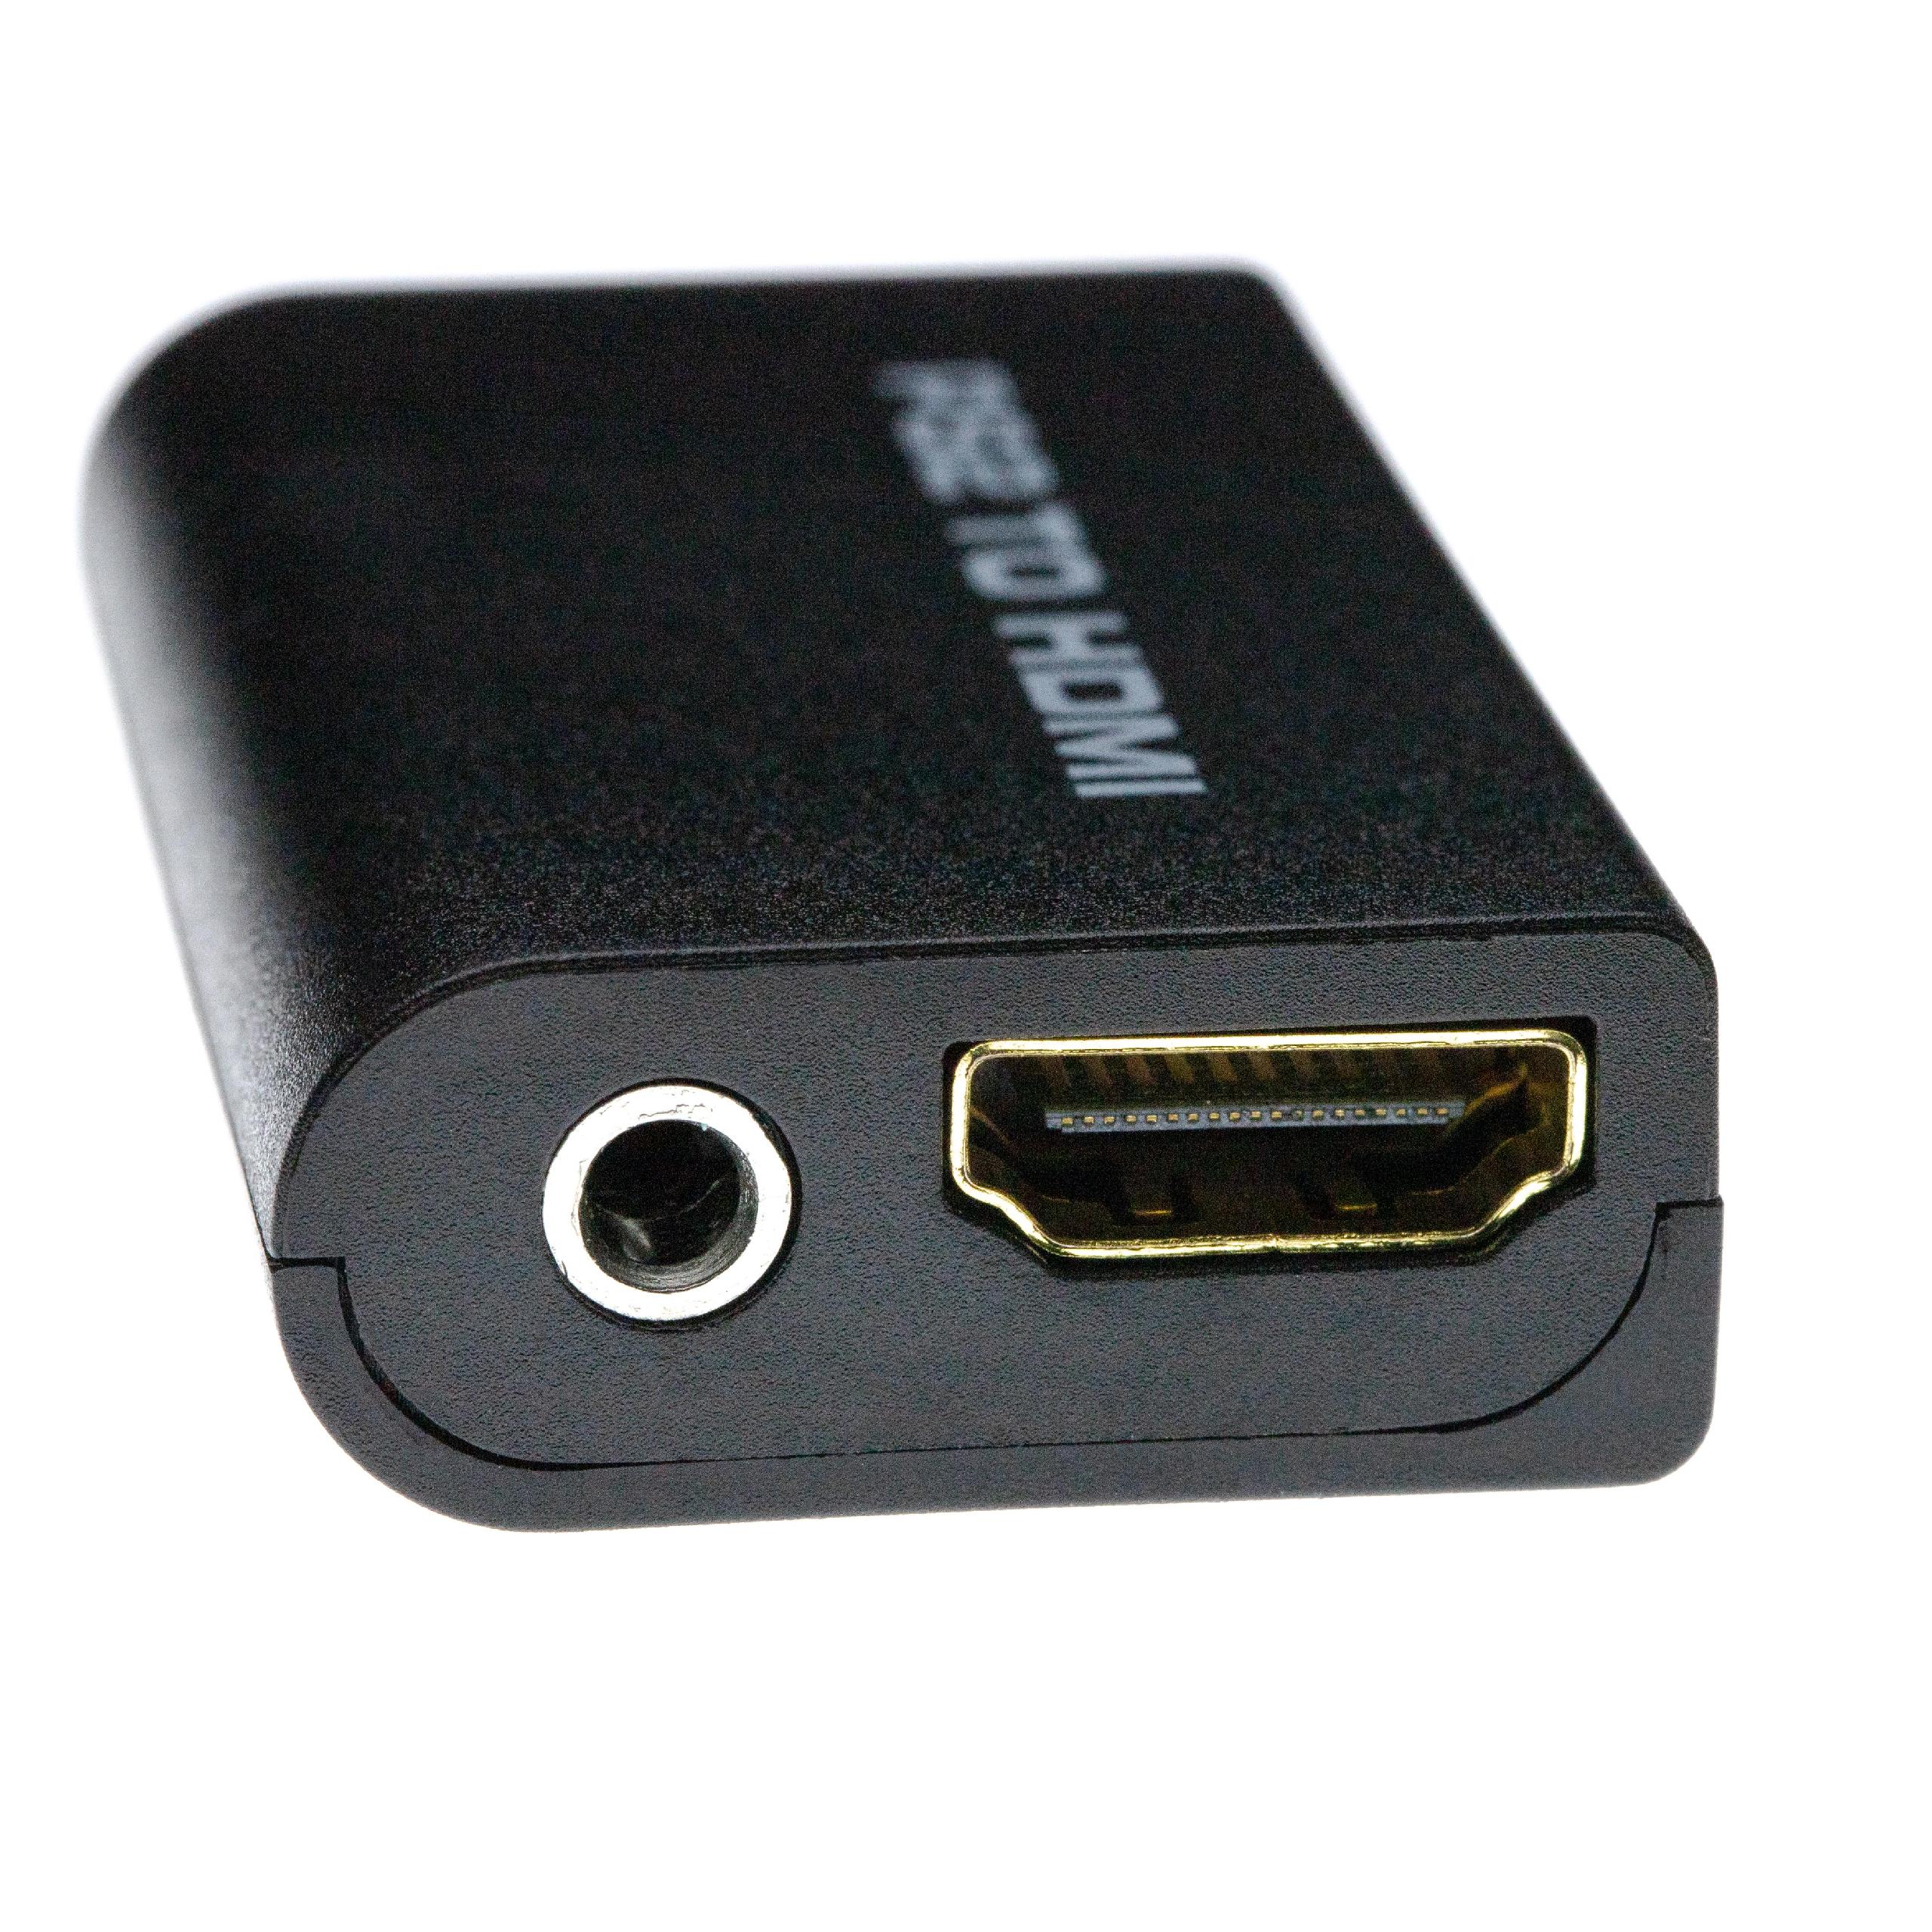 vhbw Adaptador HDMI consola de juegos a monitor HDMI/convertidor HDTV + clavija 3,5mm incl. cable USB - negro